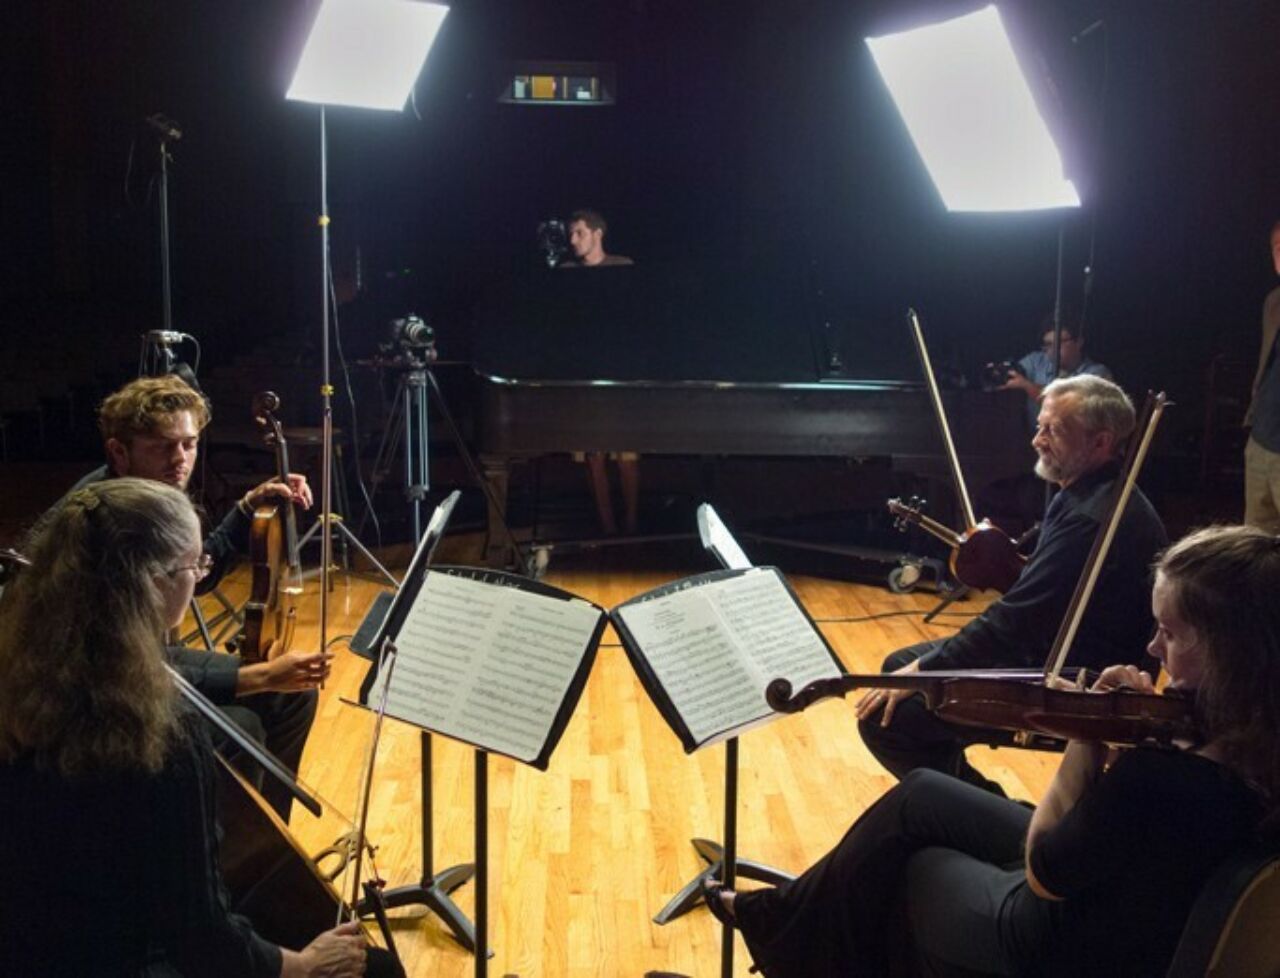 Studio recording of a violin performance.